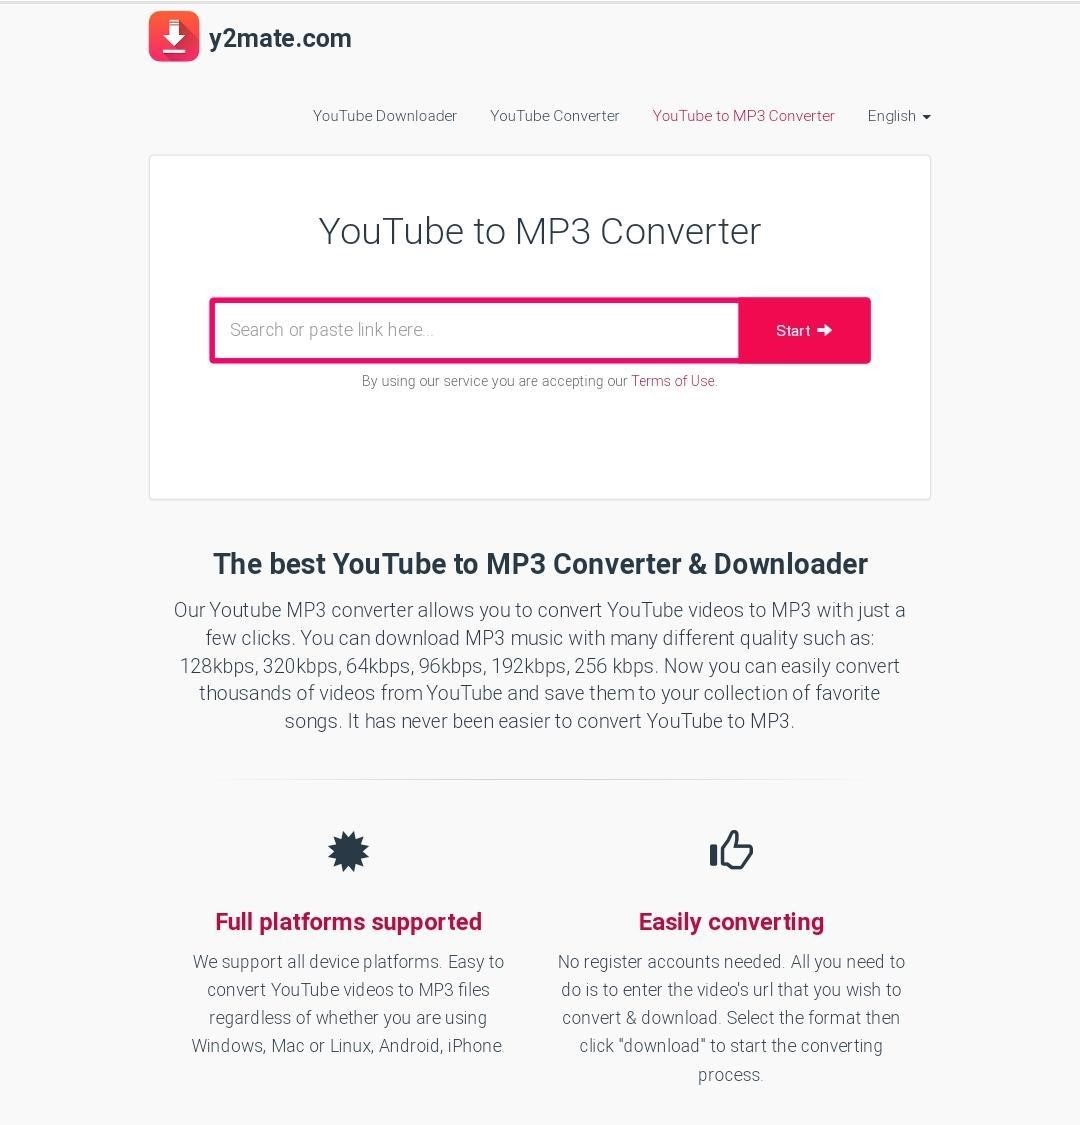 mp3 to youtube converter mac